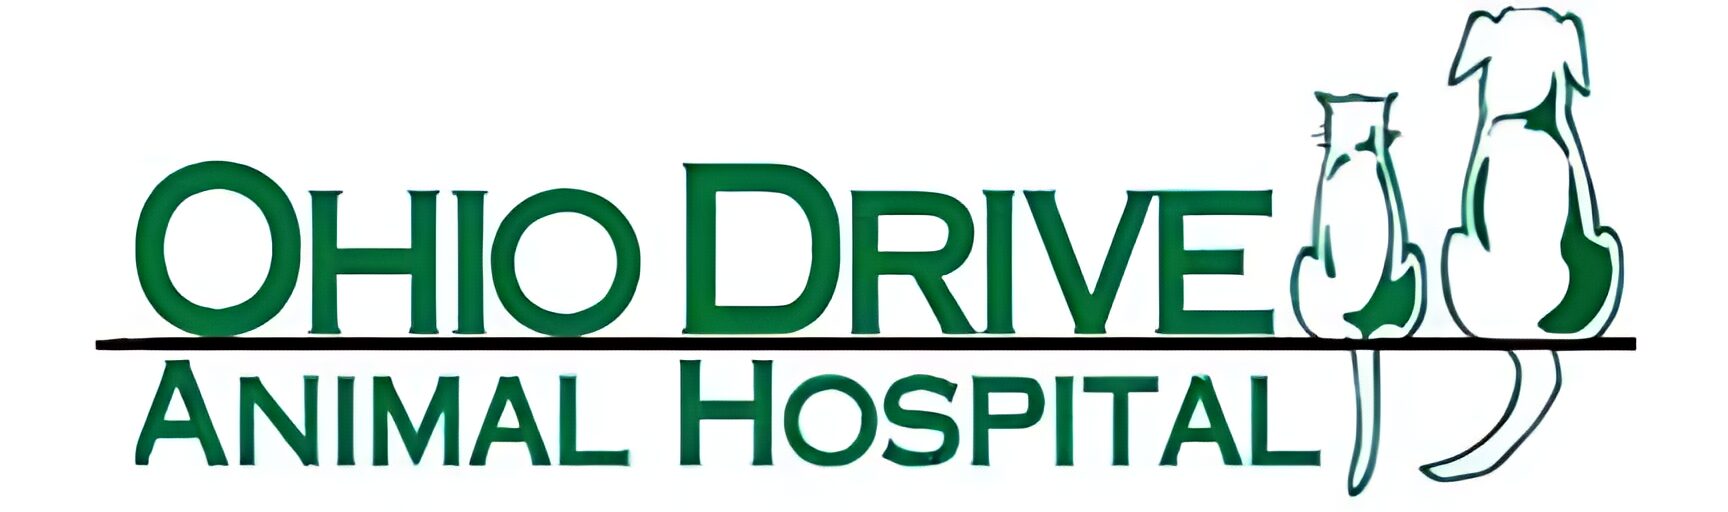 Ohio Drive Animal Hospital logo